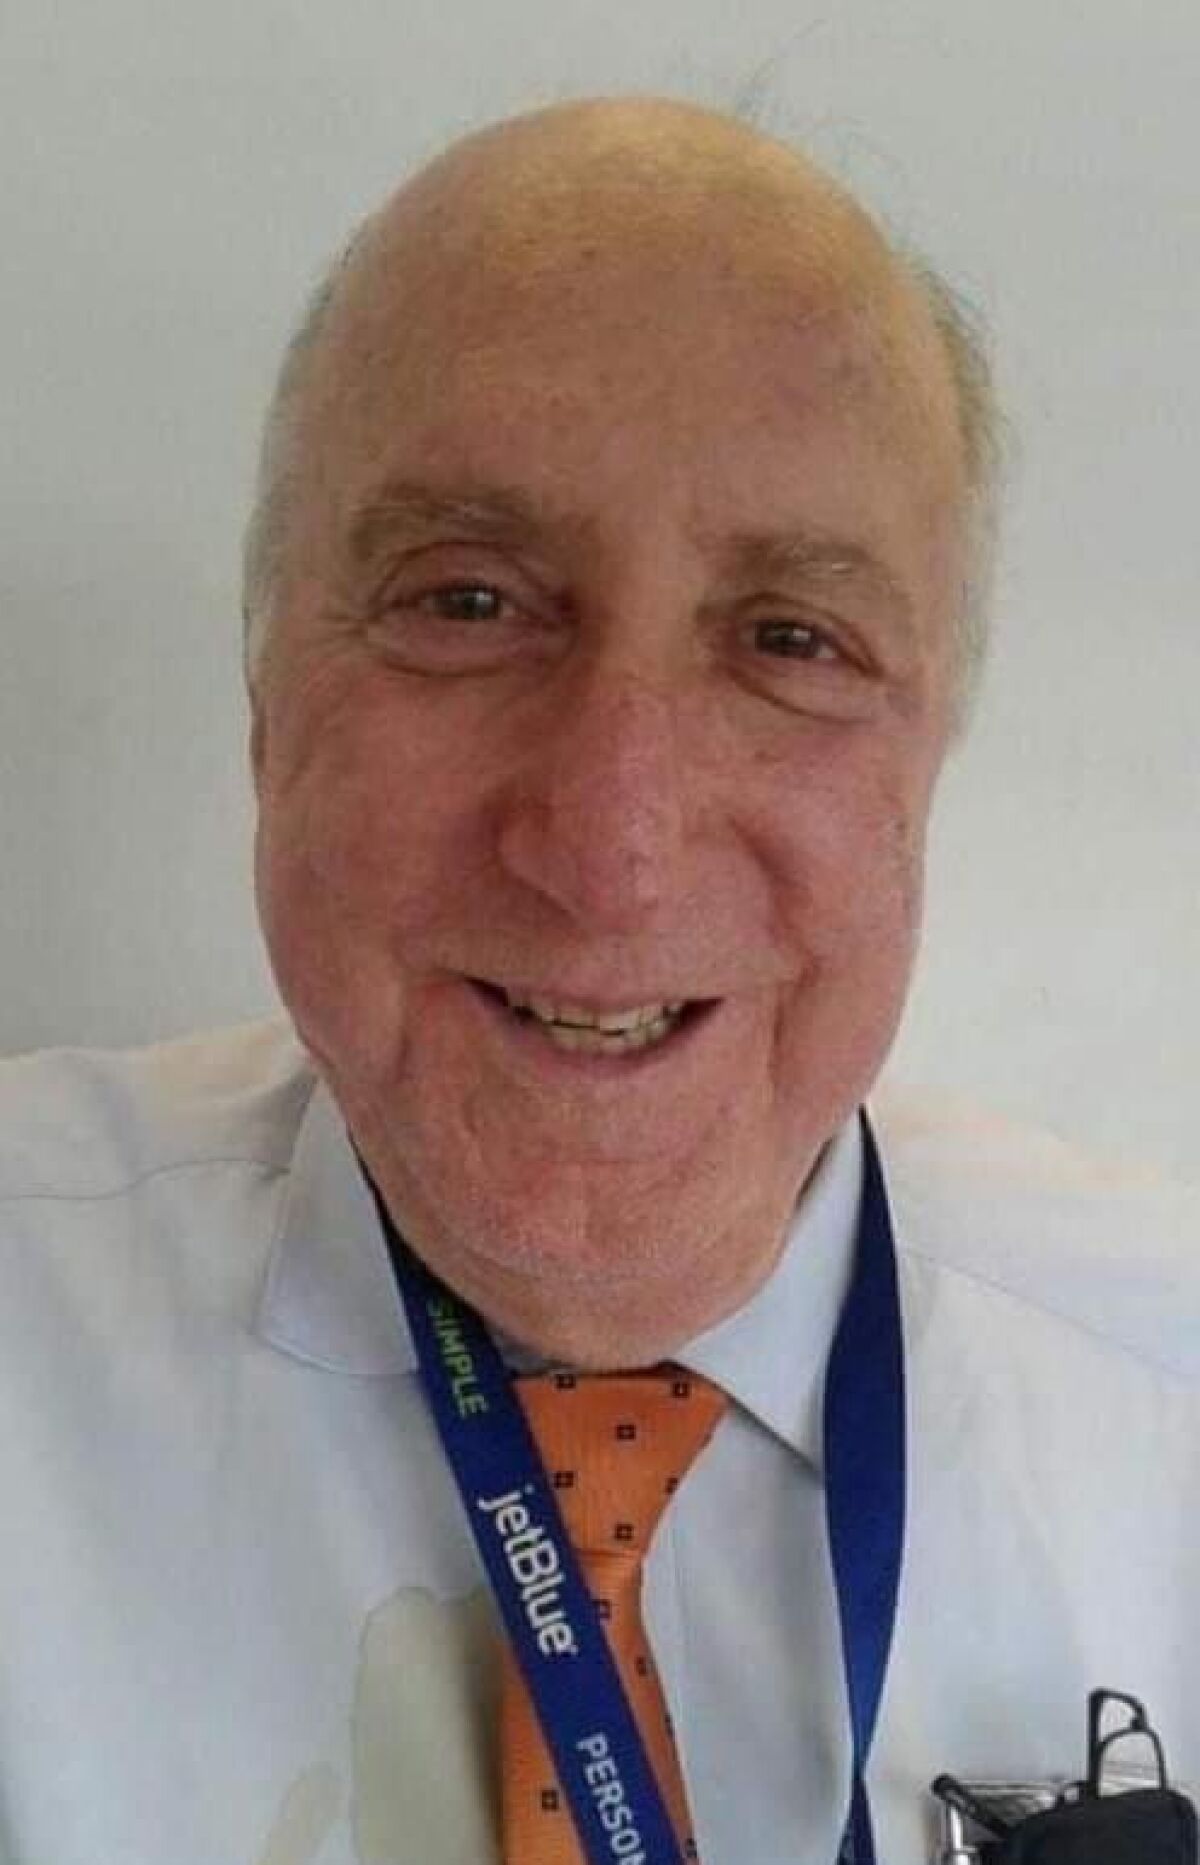 JetBlue flight attendant Ralph Gismondi died April 5 from COVID-19.